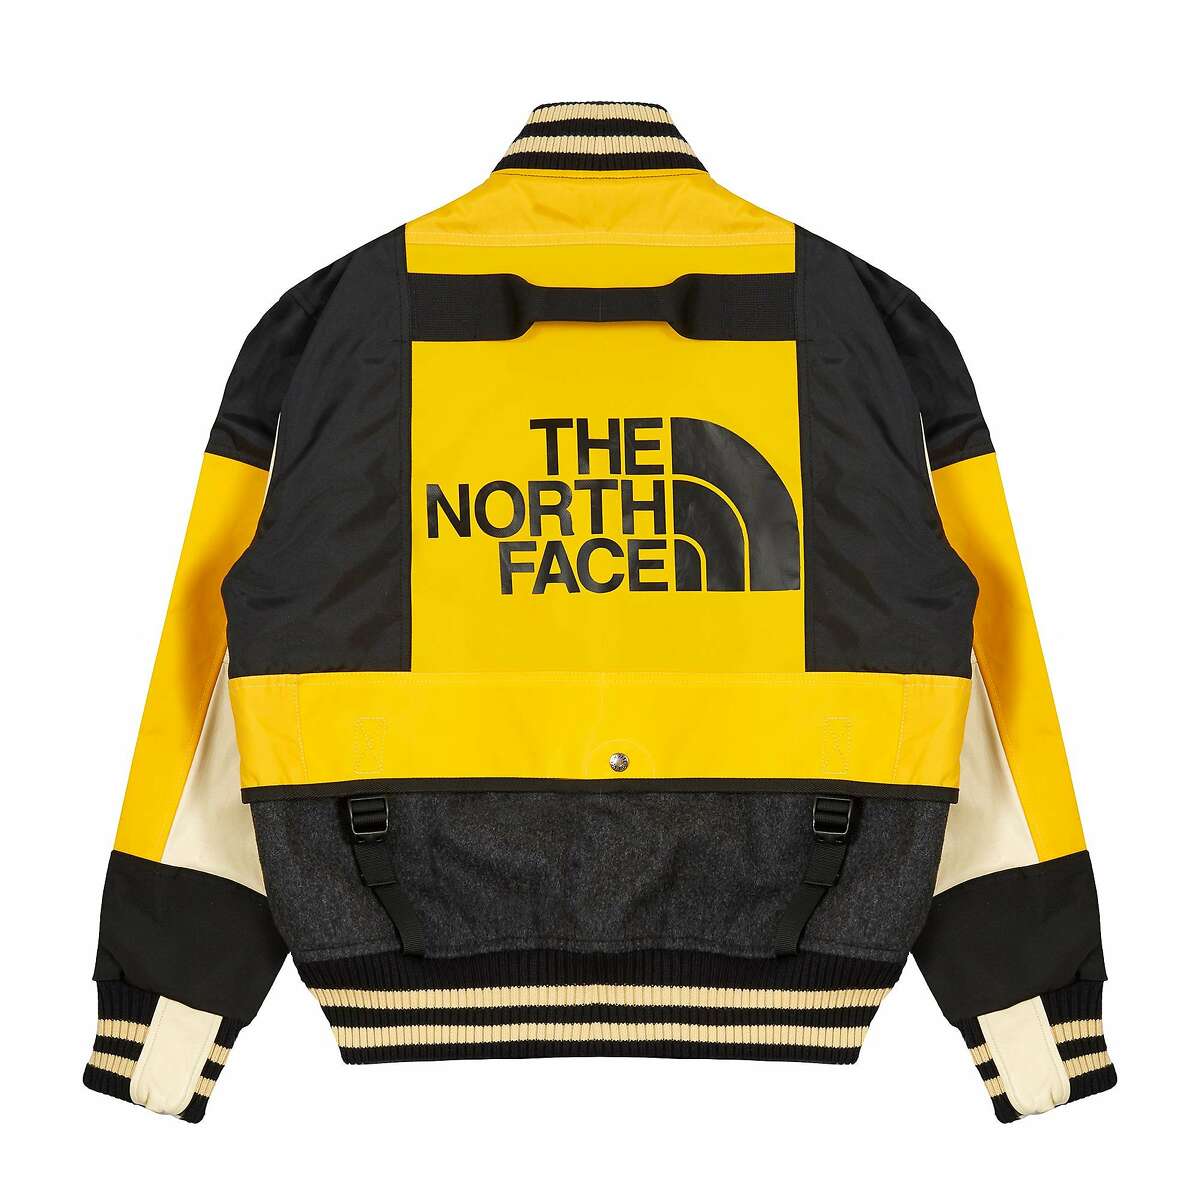 Comme des Gar�ons�Junya Watanabe Man x The North Face varsity jacket, $1565, available at The North Face San Franciso, 701 Sansome Street.